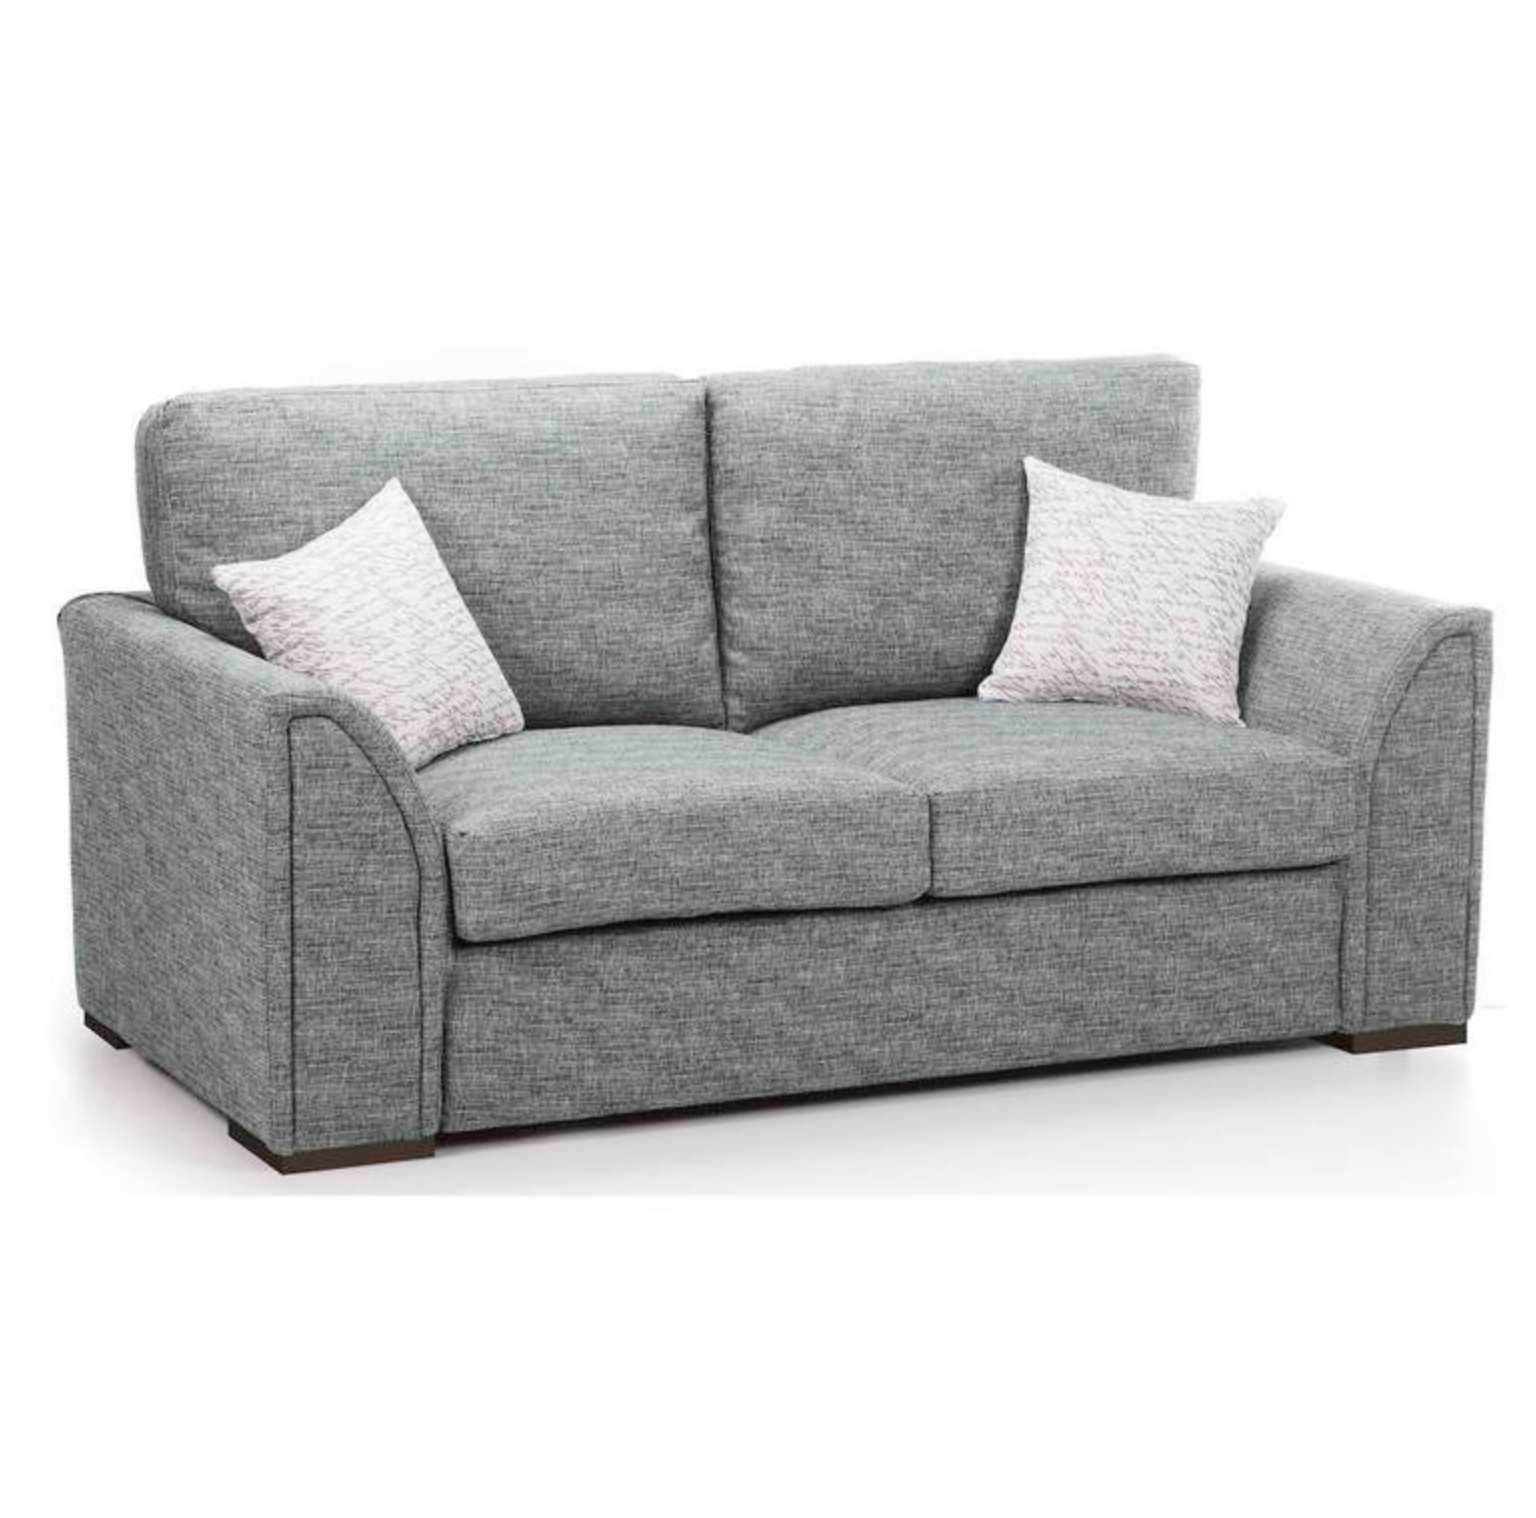 Healy 3 Seater Sofa Como Charcoal Fabric